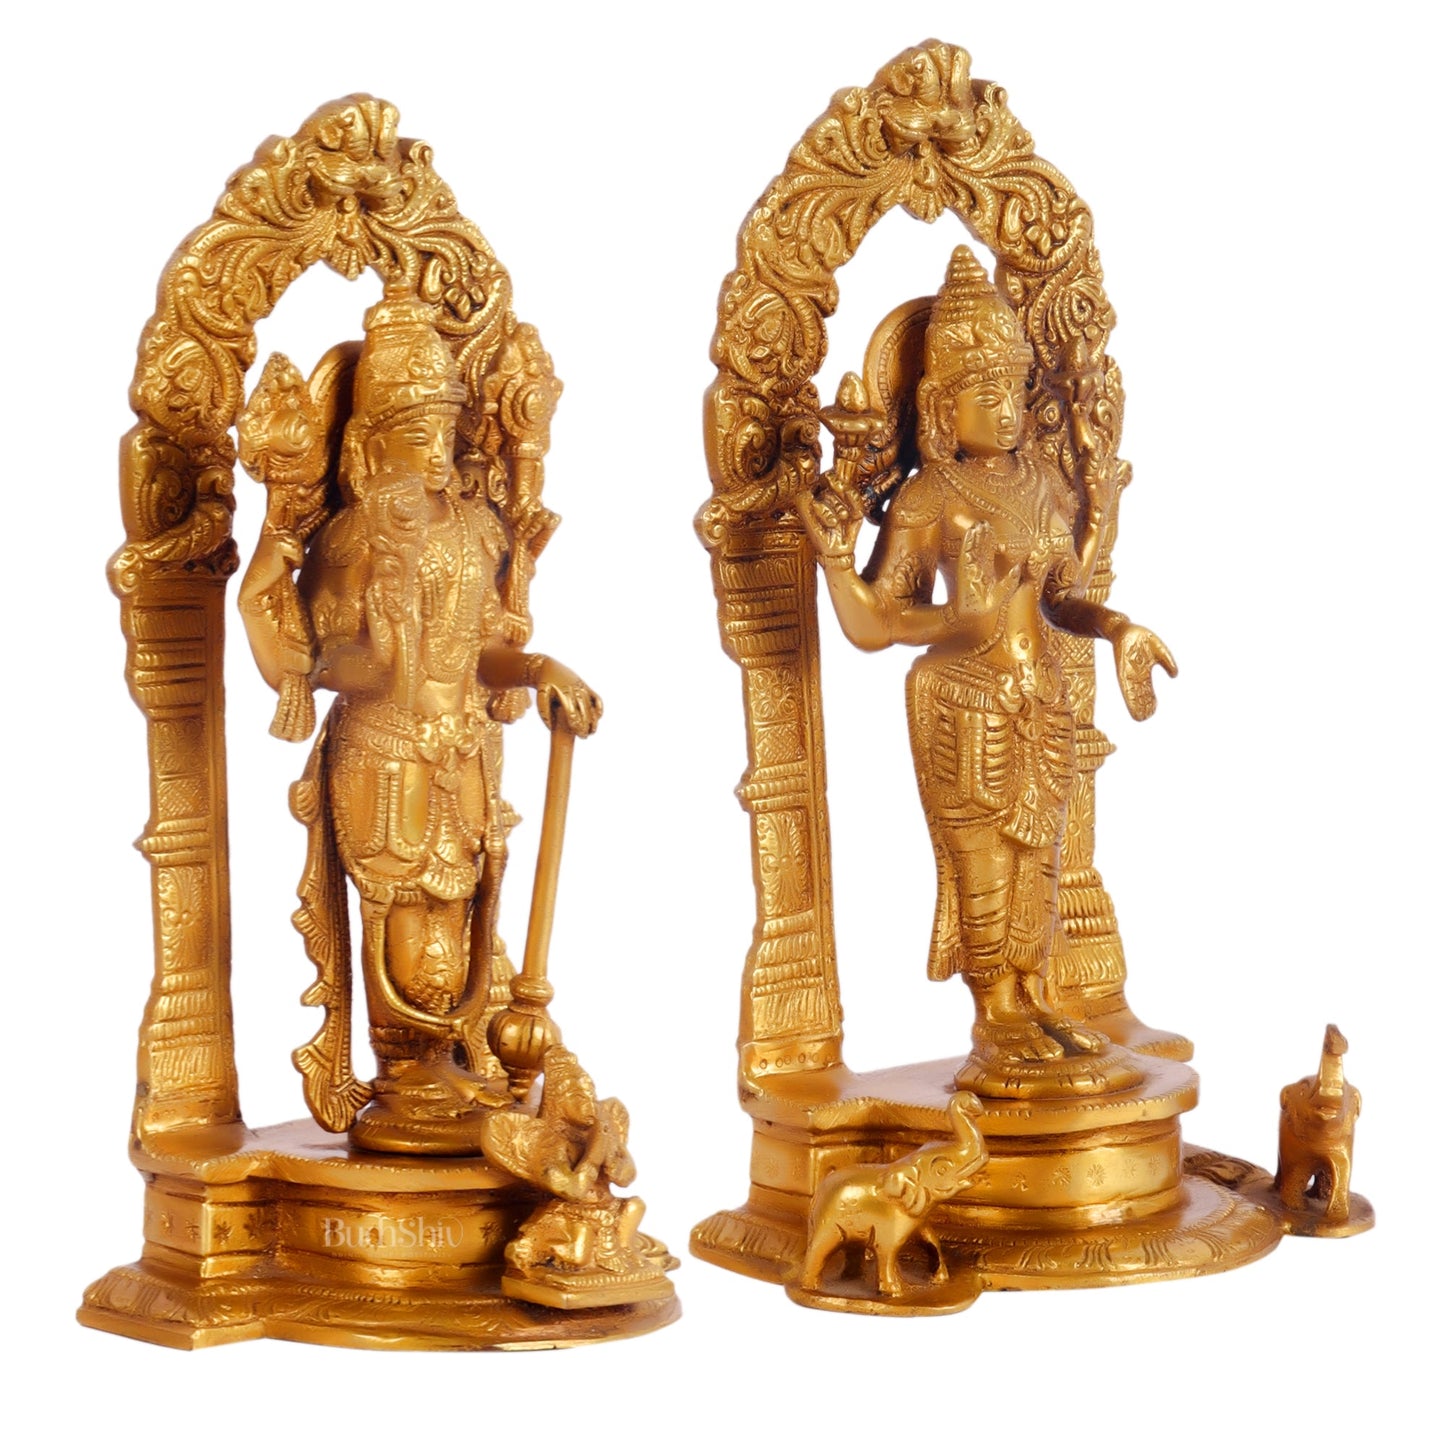 Vishnu Lakshmi Brass idols 9 inch - Budhshiv.com